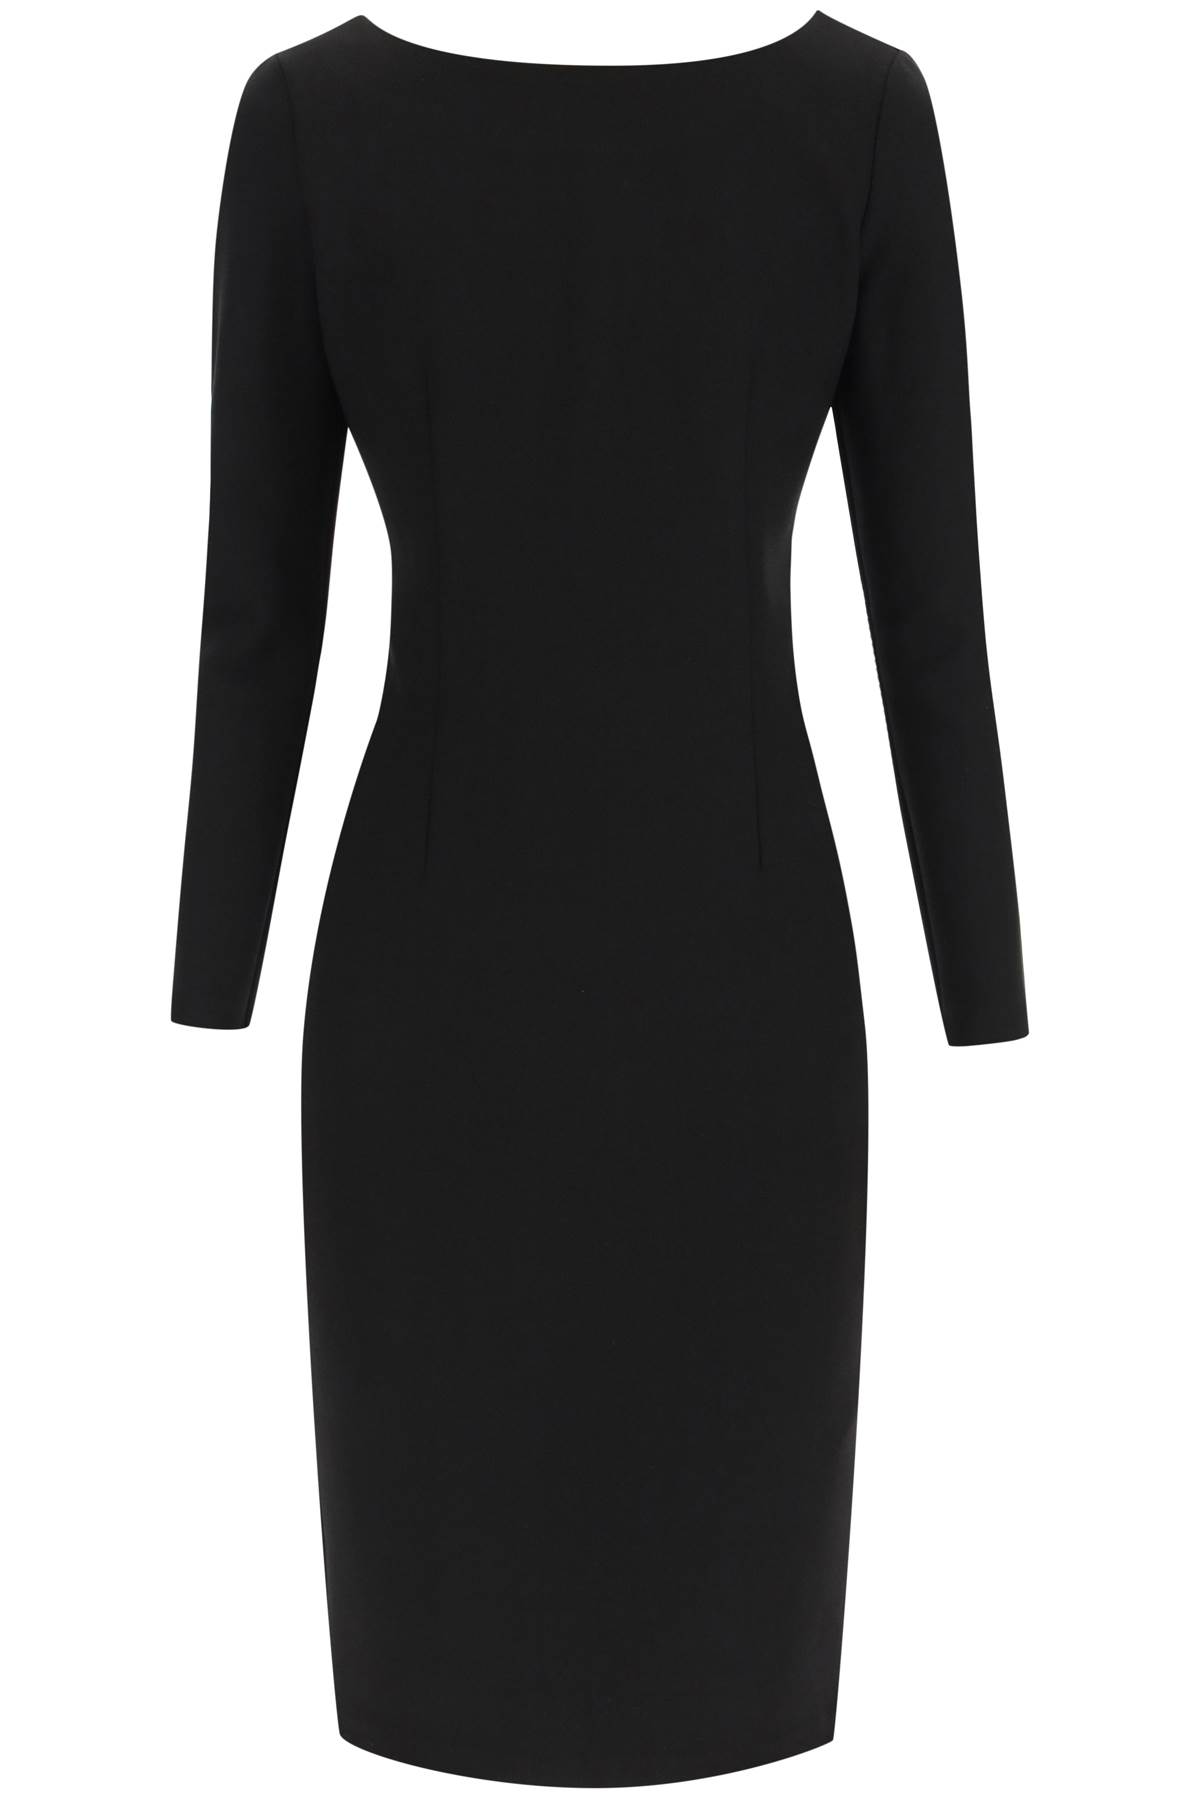 Guess By Marciano Mimi Long Sleeve Midi Dress In Jet Black A996 (black ...